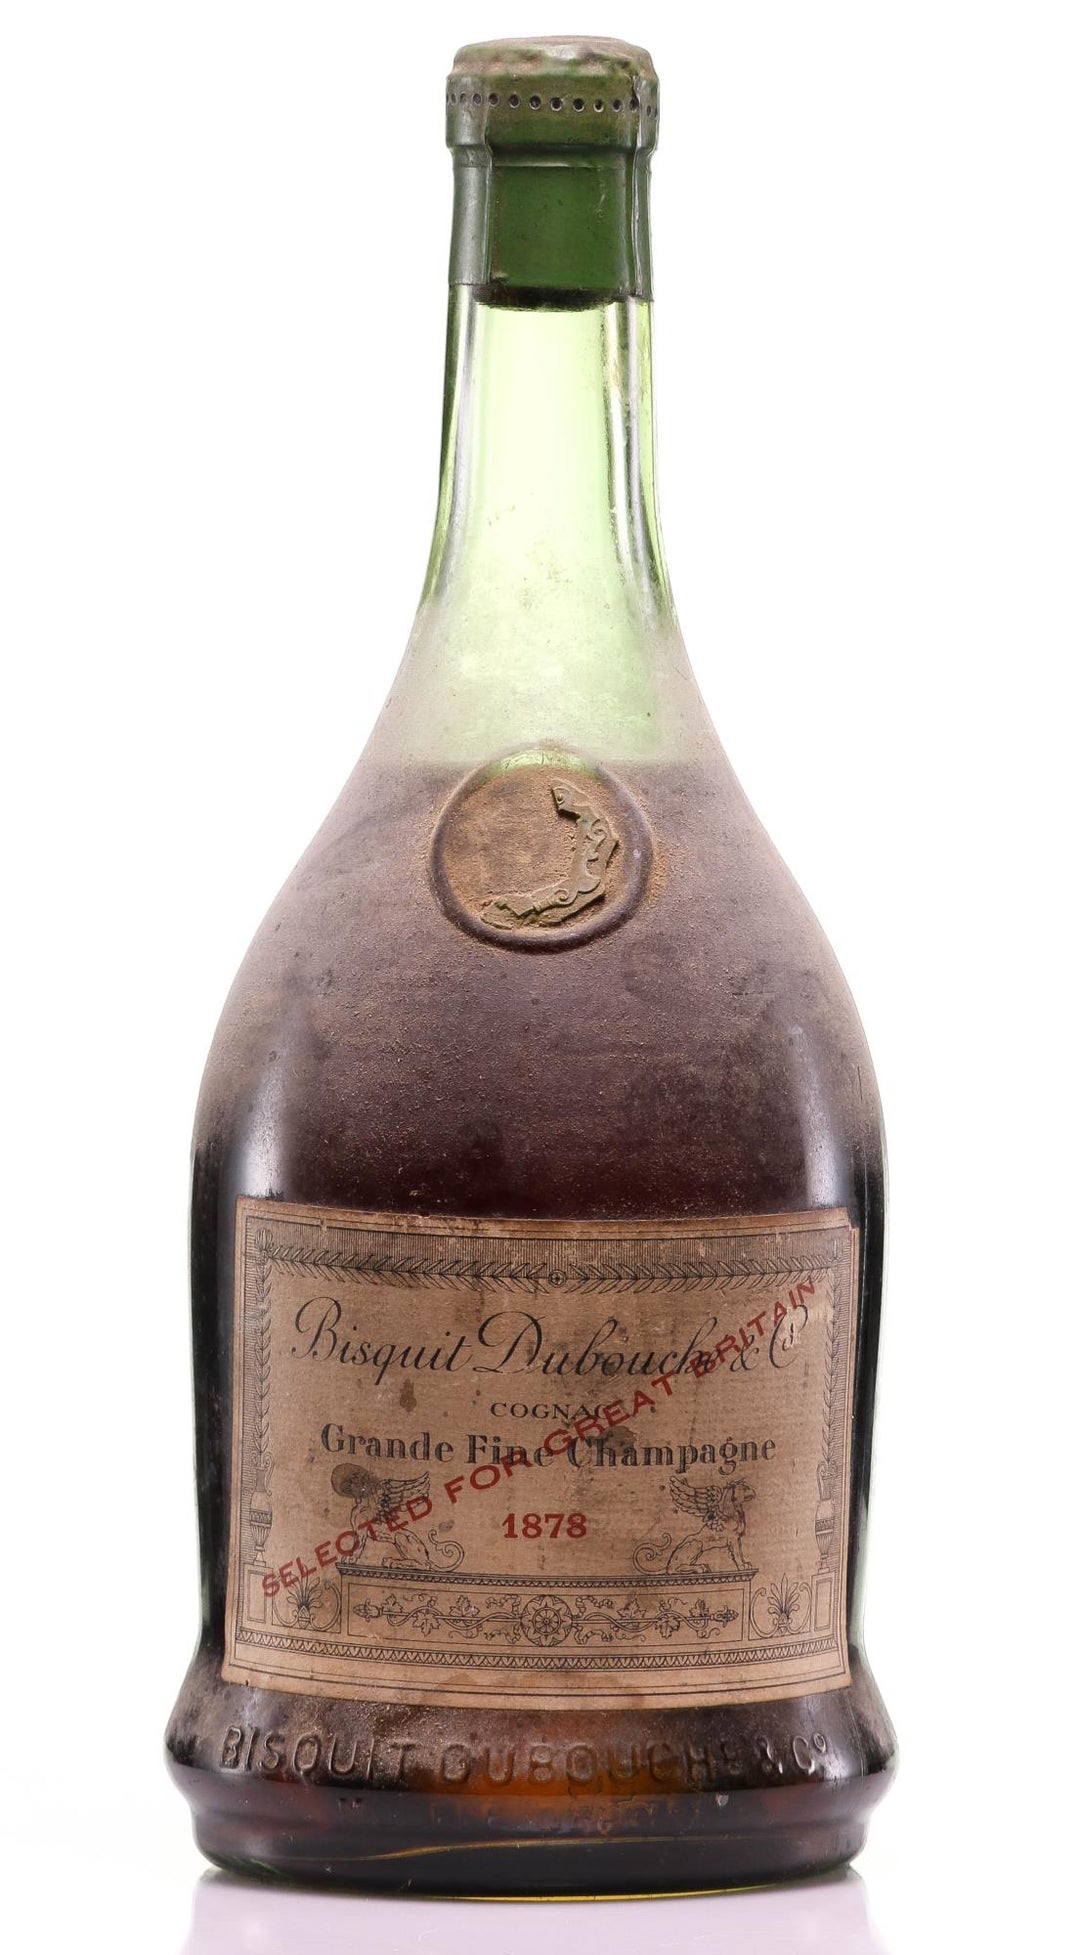 1878 Bisquit Dubouché Grande Fine Champagne Cognac - Rue Pinard